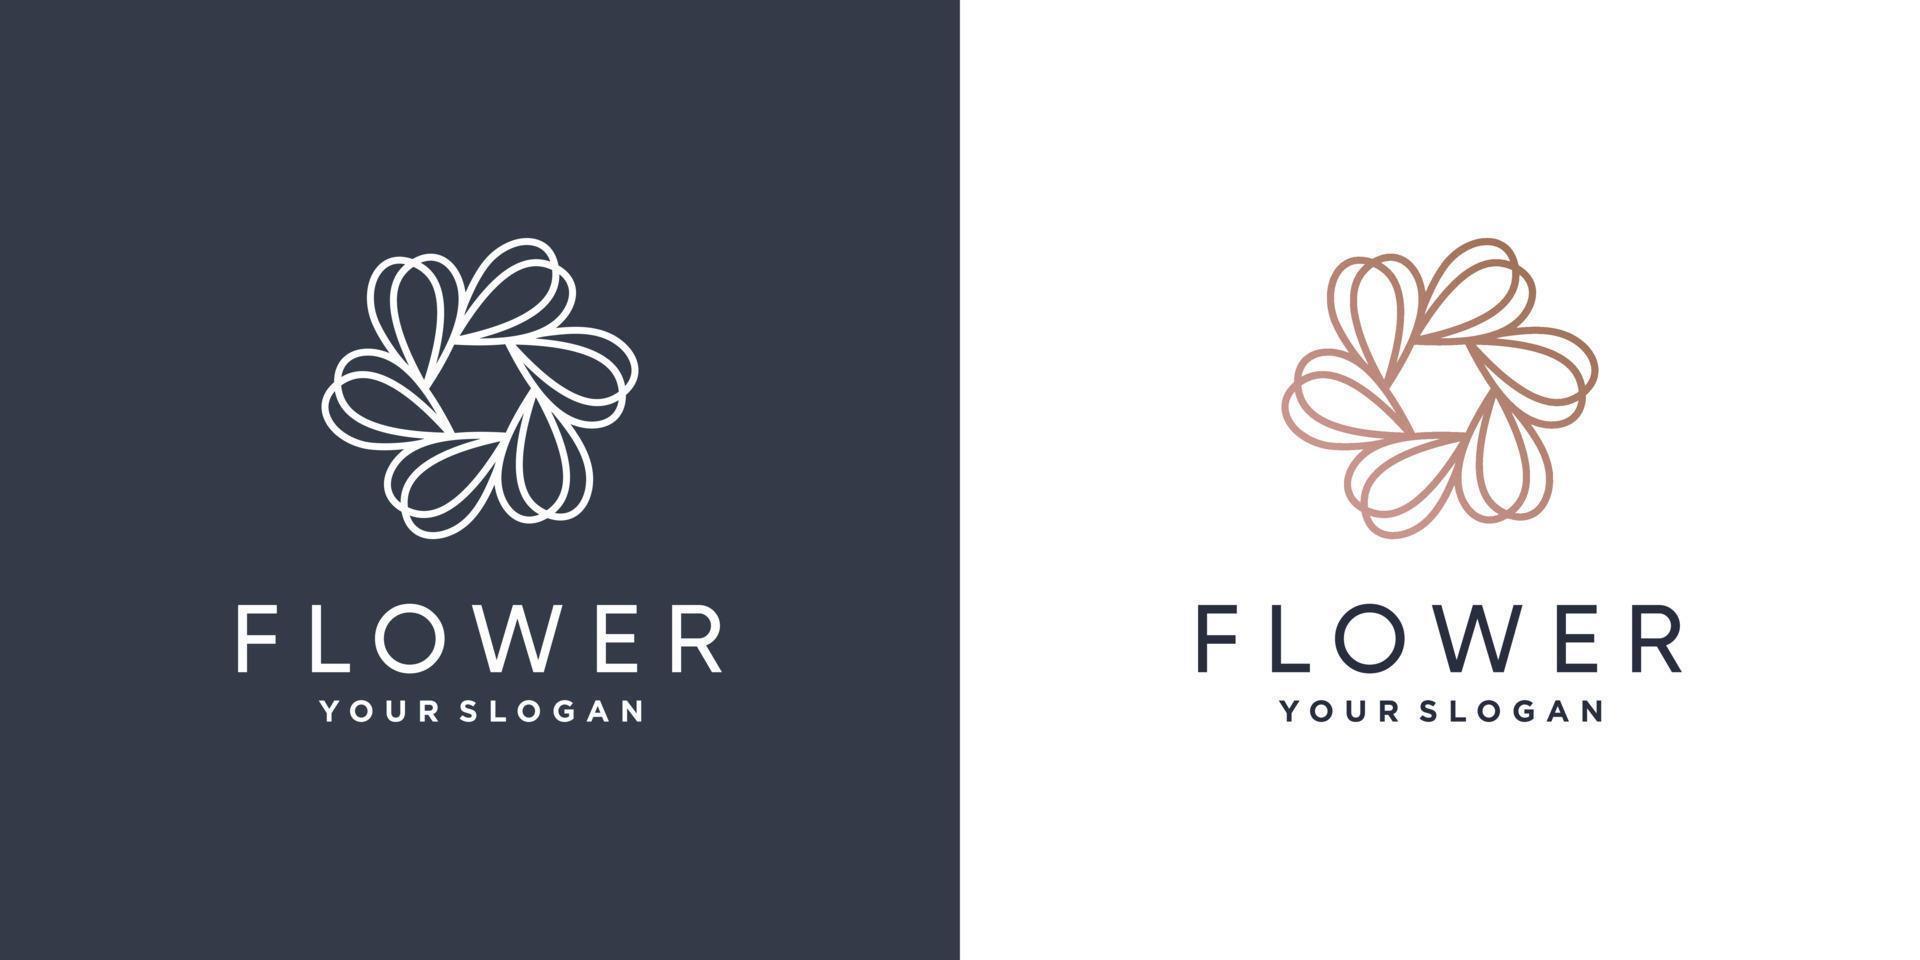 Flower logo with creative idea Premium Vector part 1